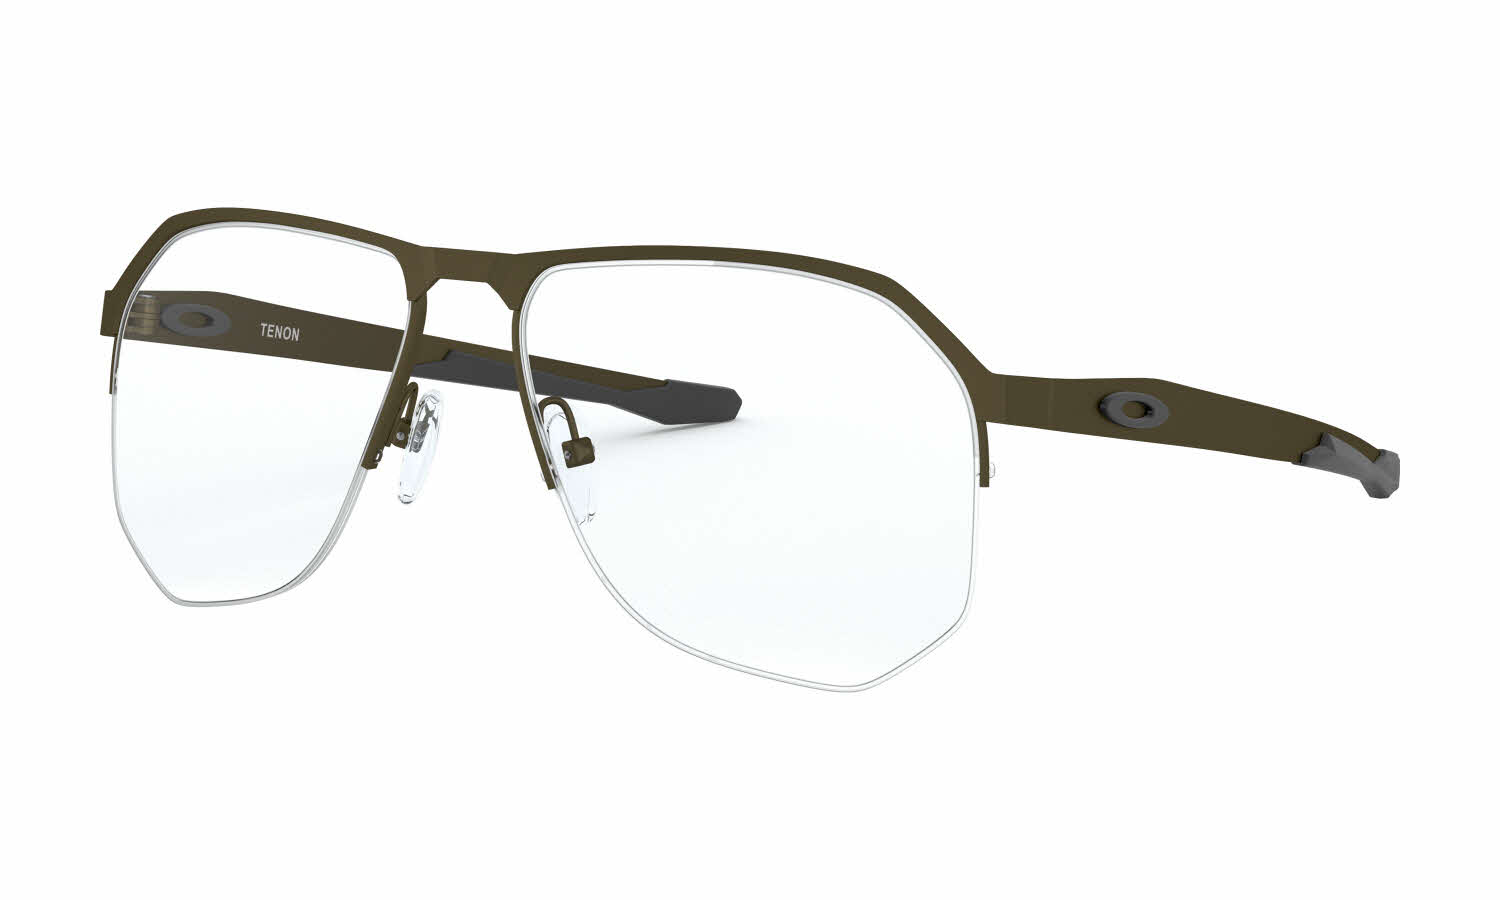 Oakley Tenon Men's Eyeglasses In Brown